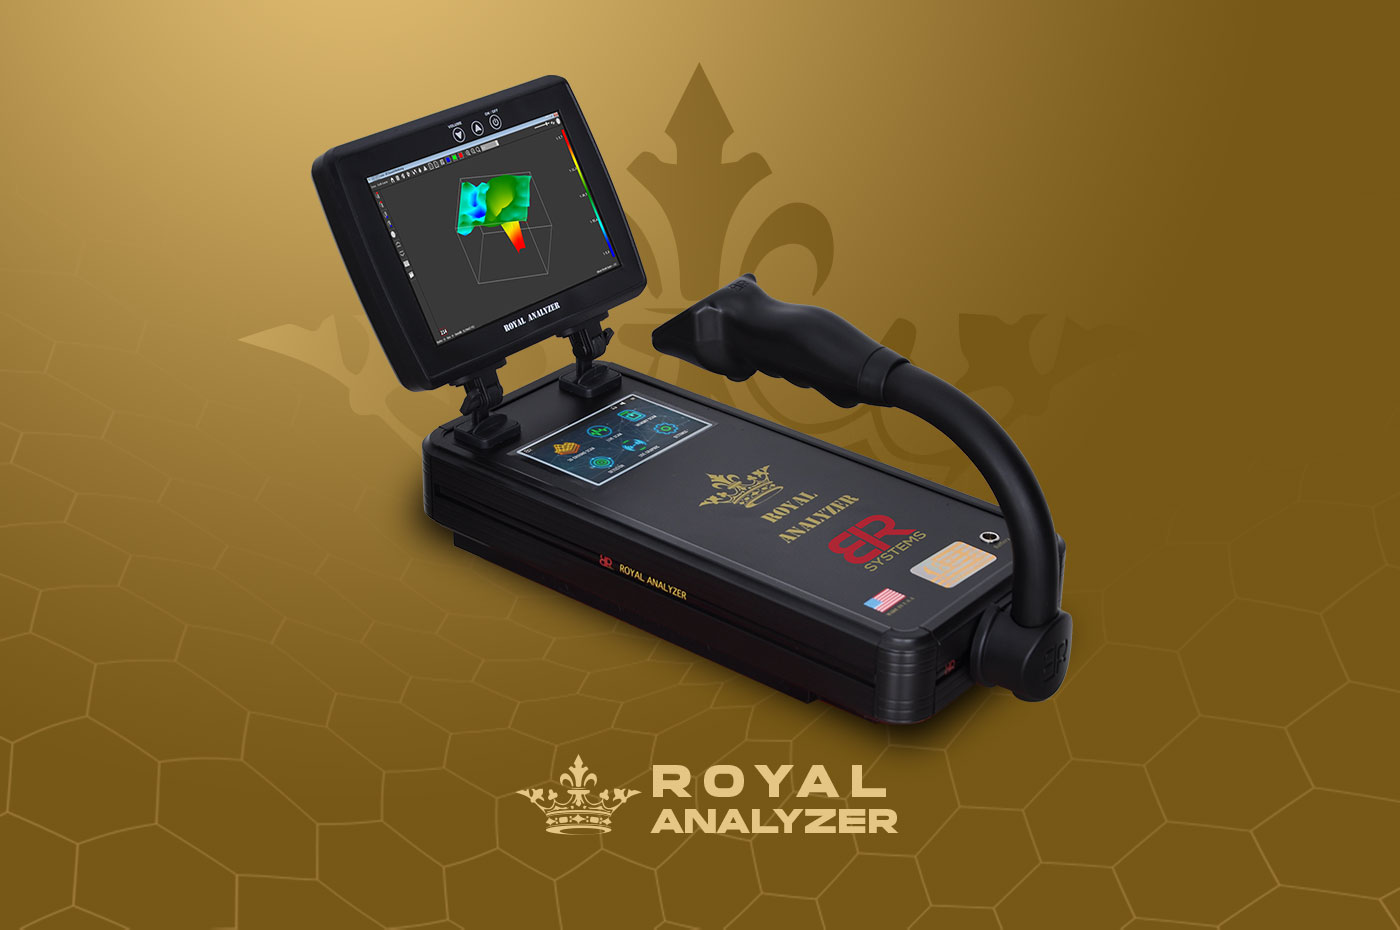 Royal analyzer BR